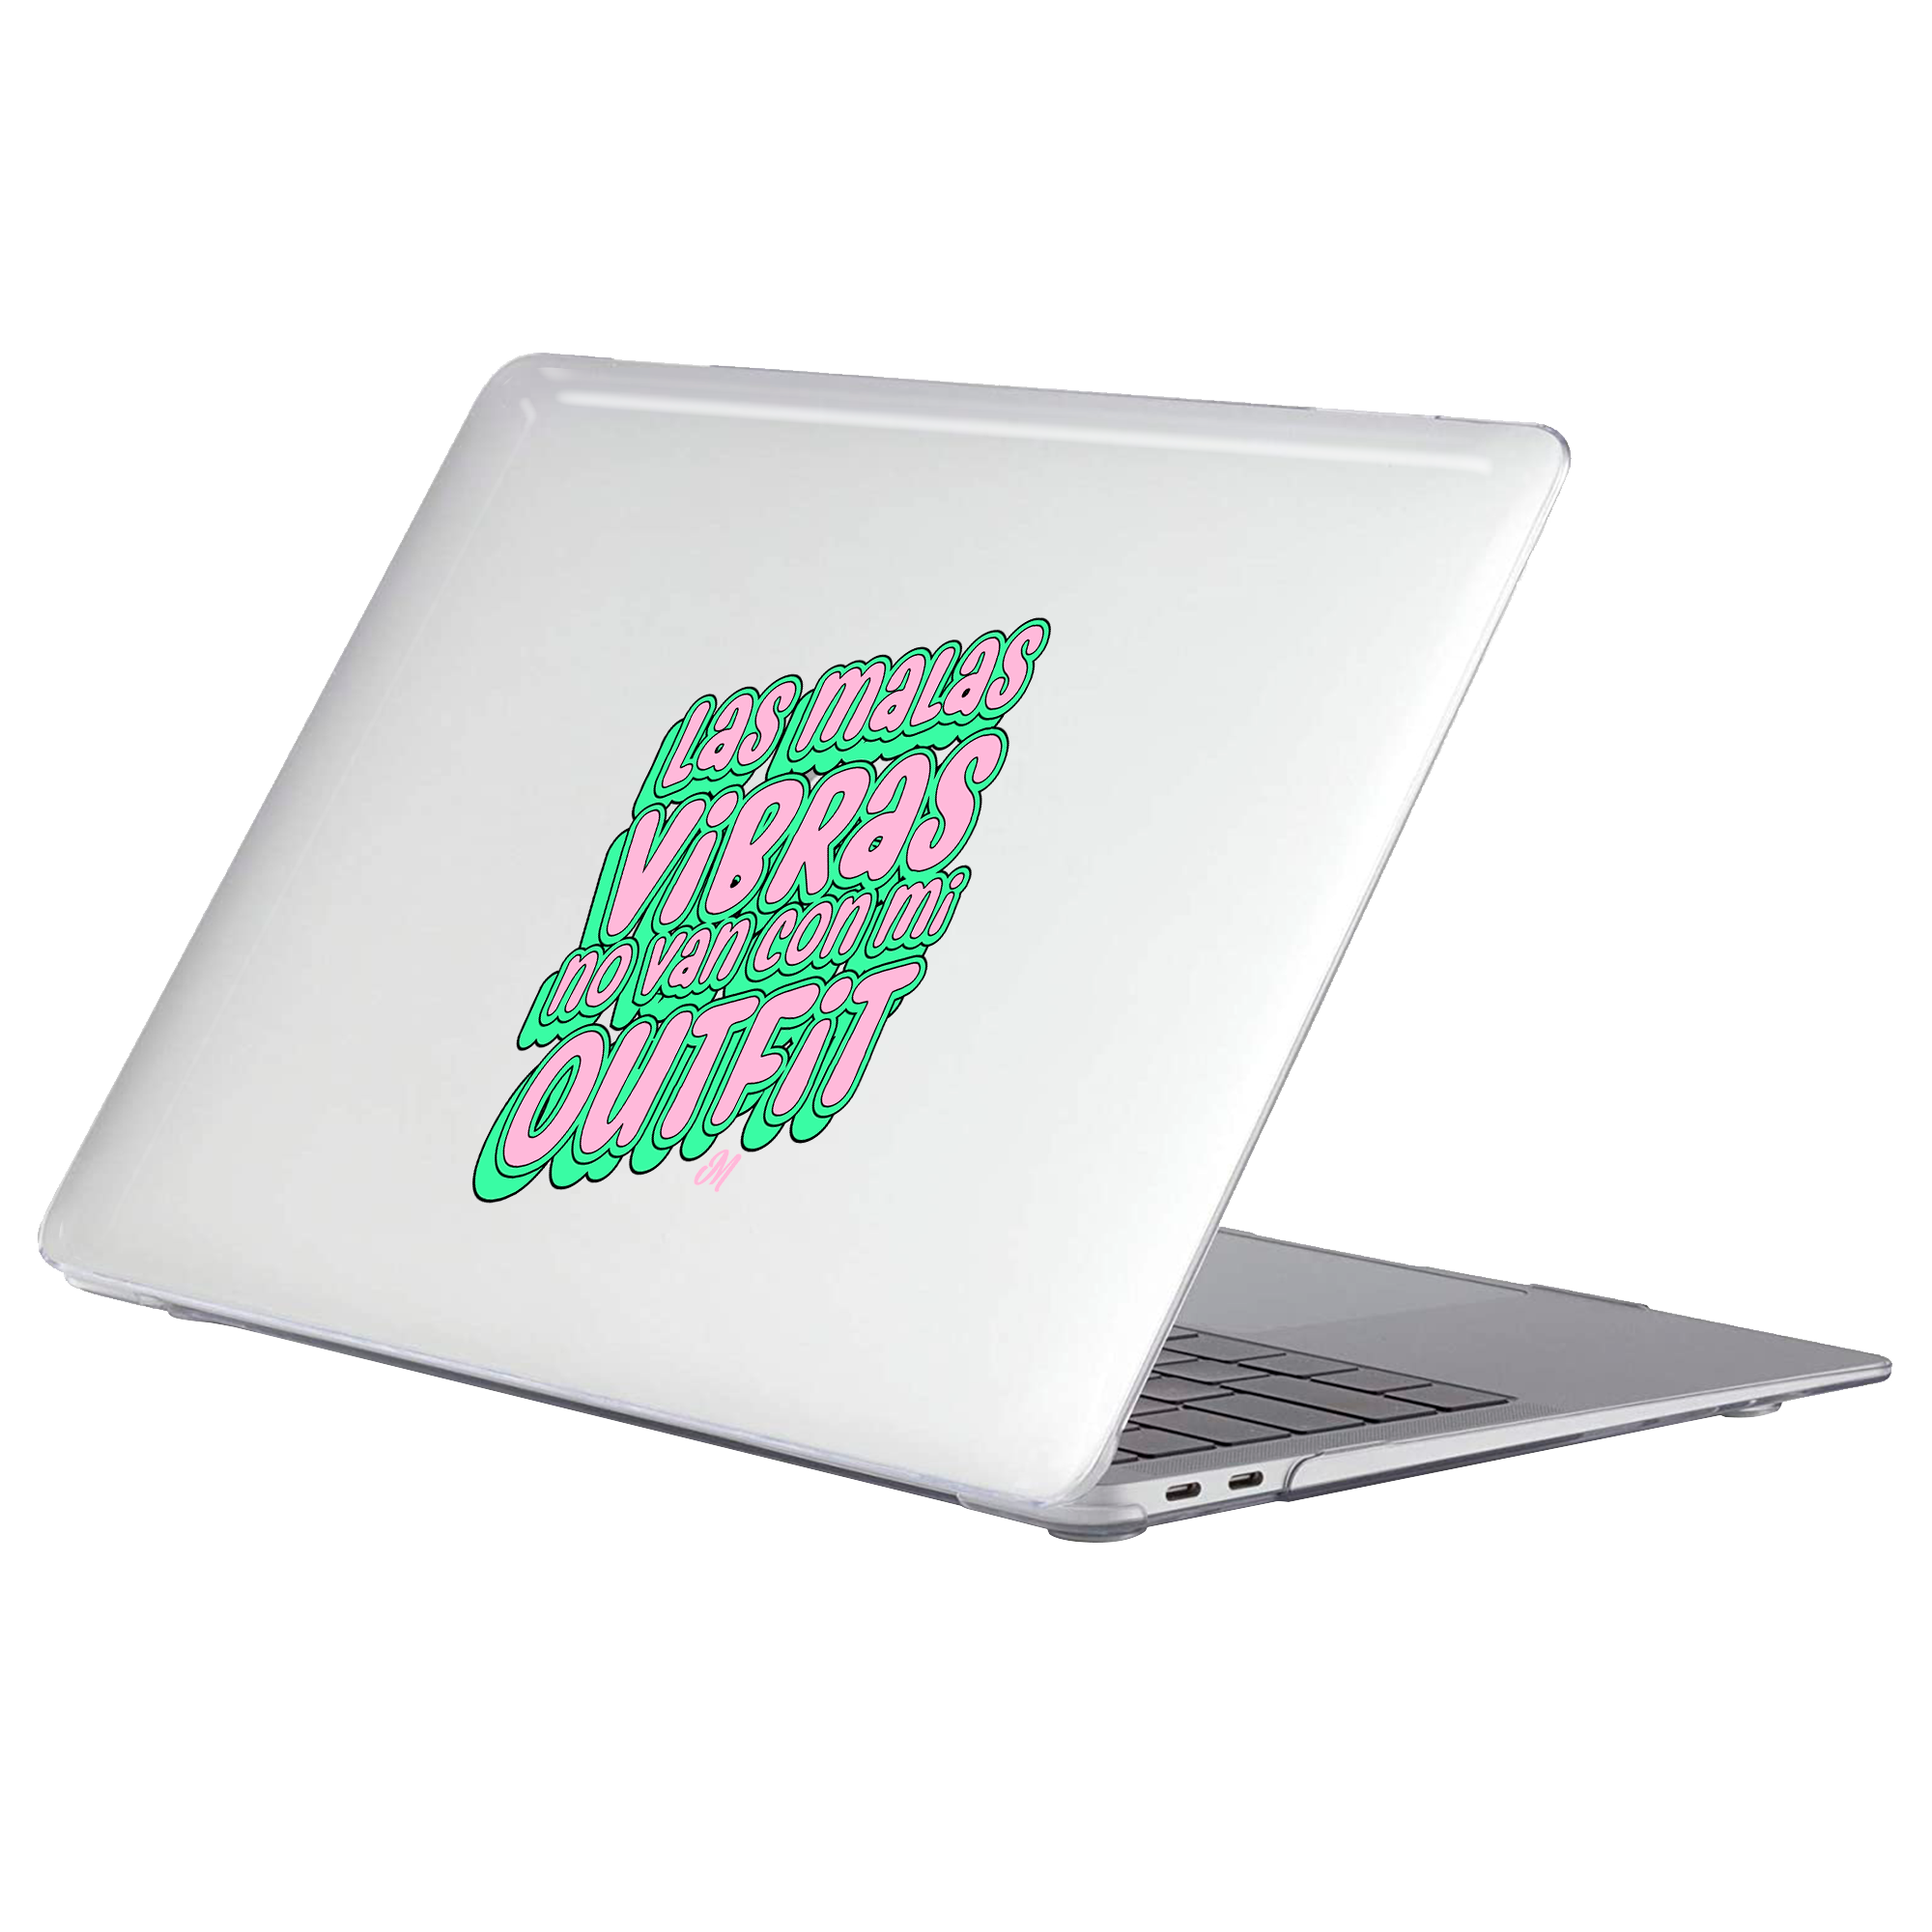 Vibras MacBook Case - Mandala Cases